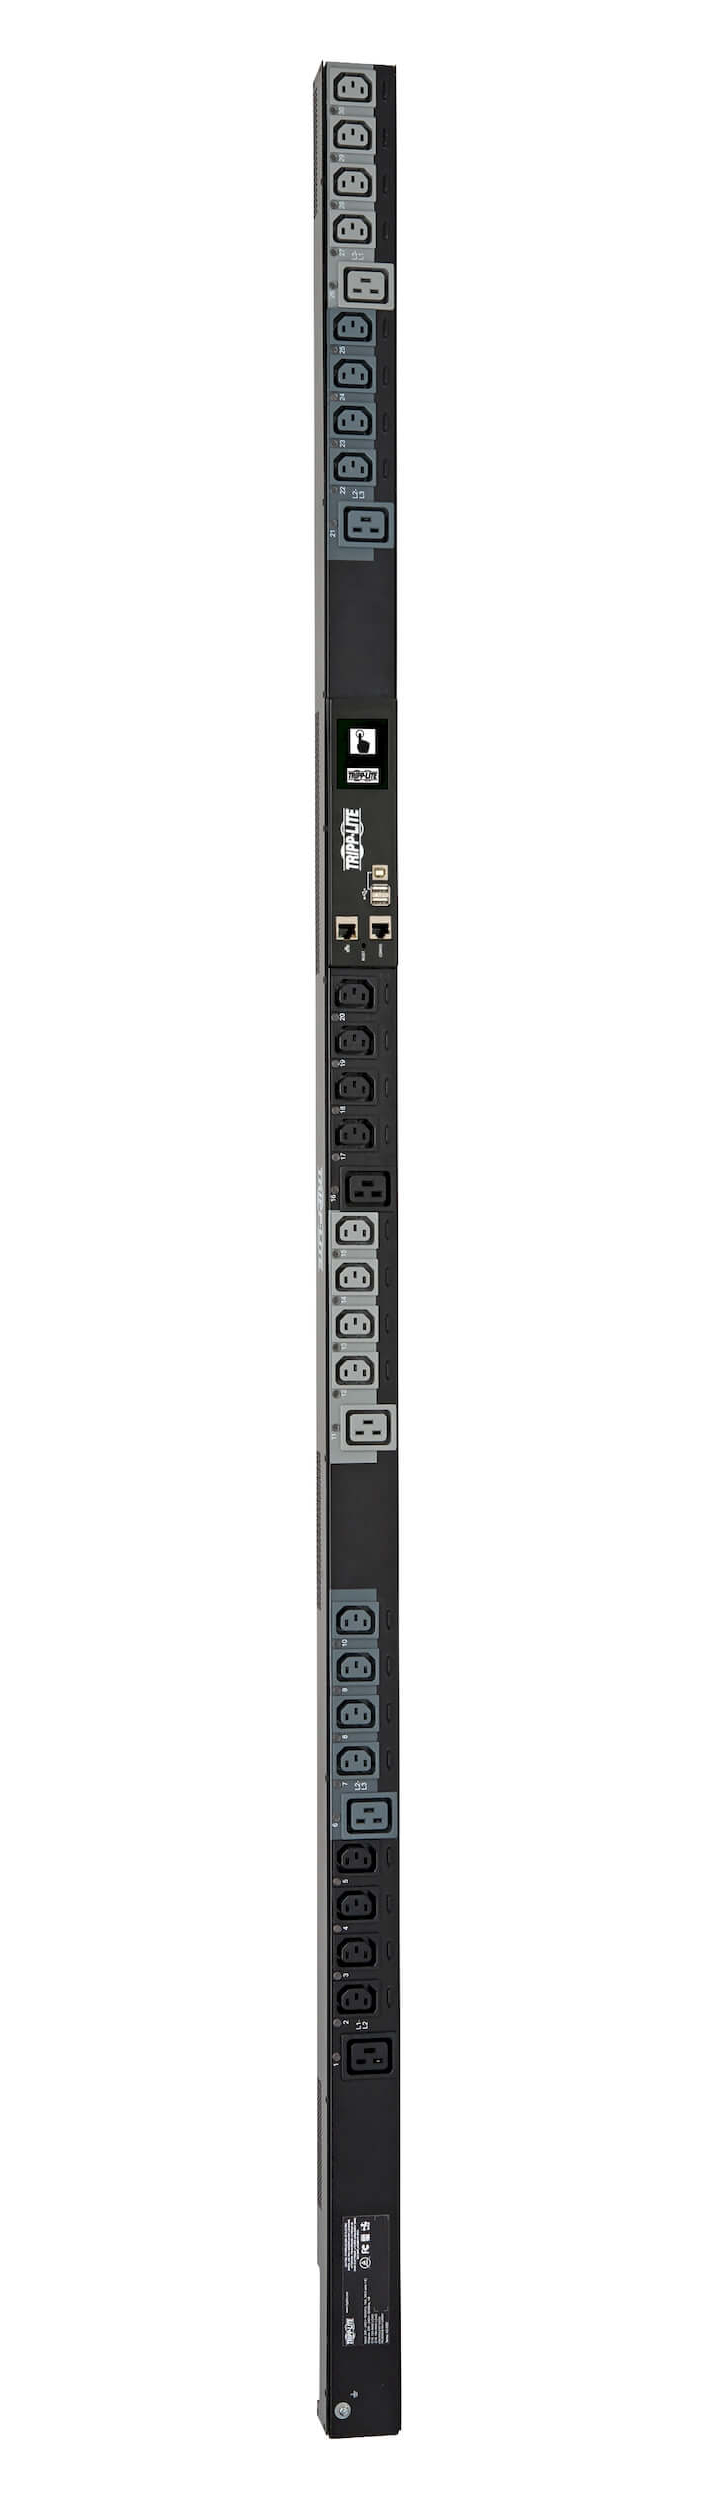 Tripp Lite PDU3XEVSR6G20 11.5kW 3-Phase Switched PDU